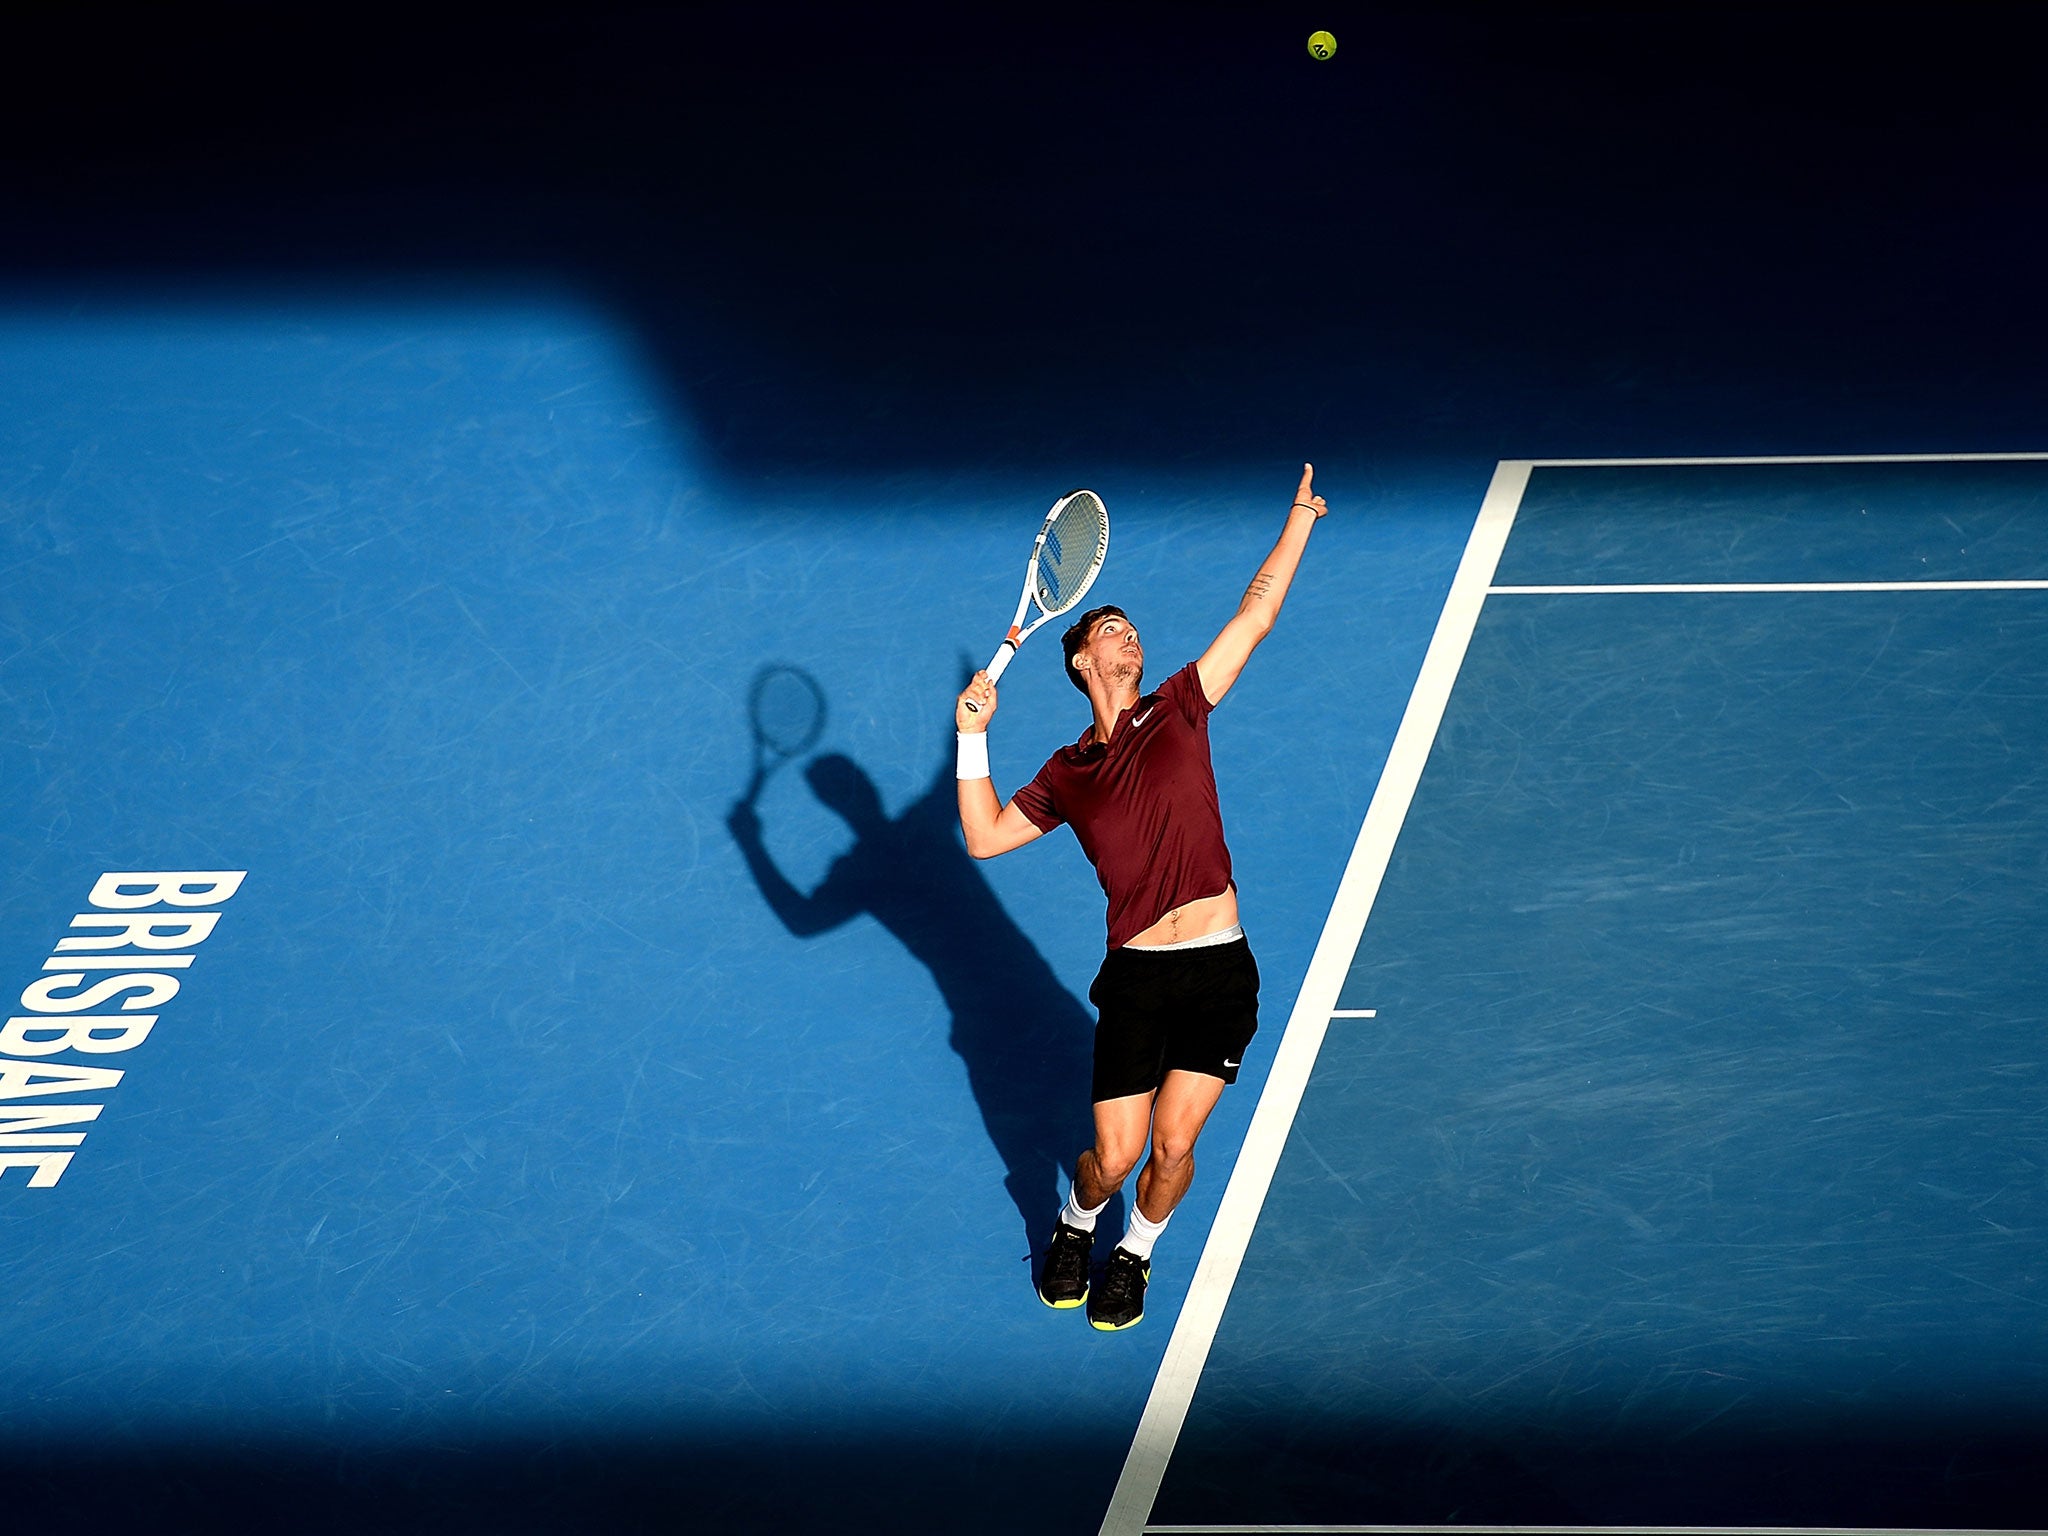 The American blew away Novak Djokovic at Wimbledon last year